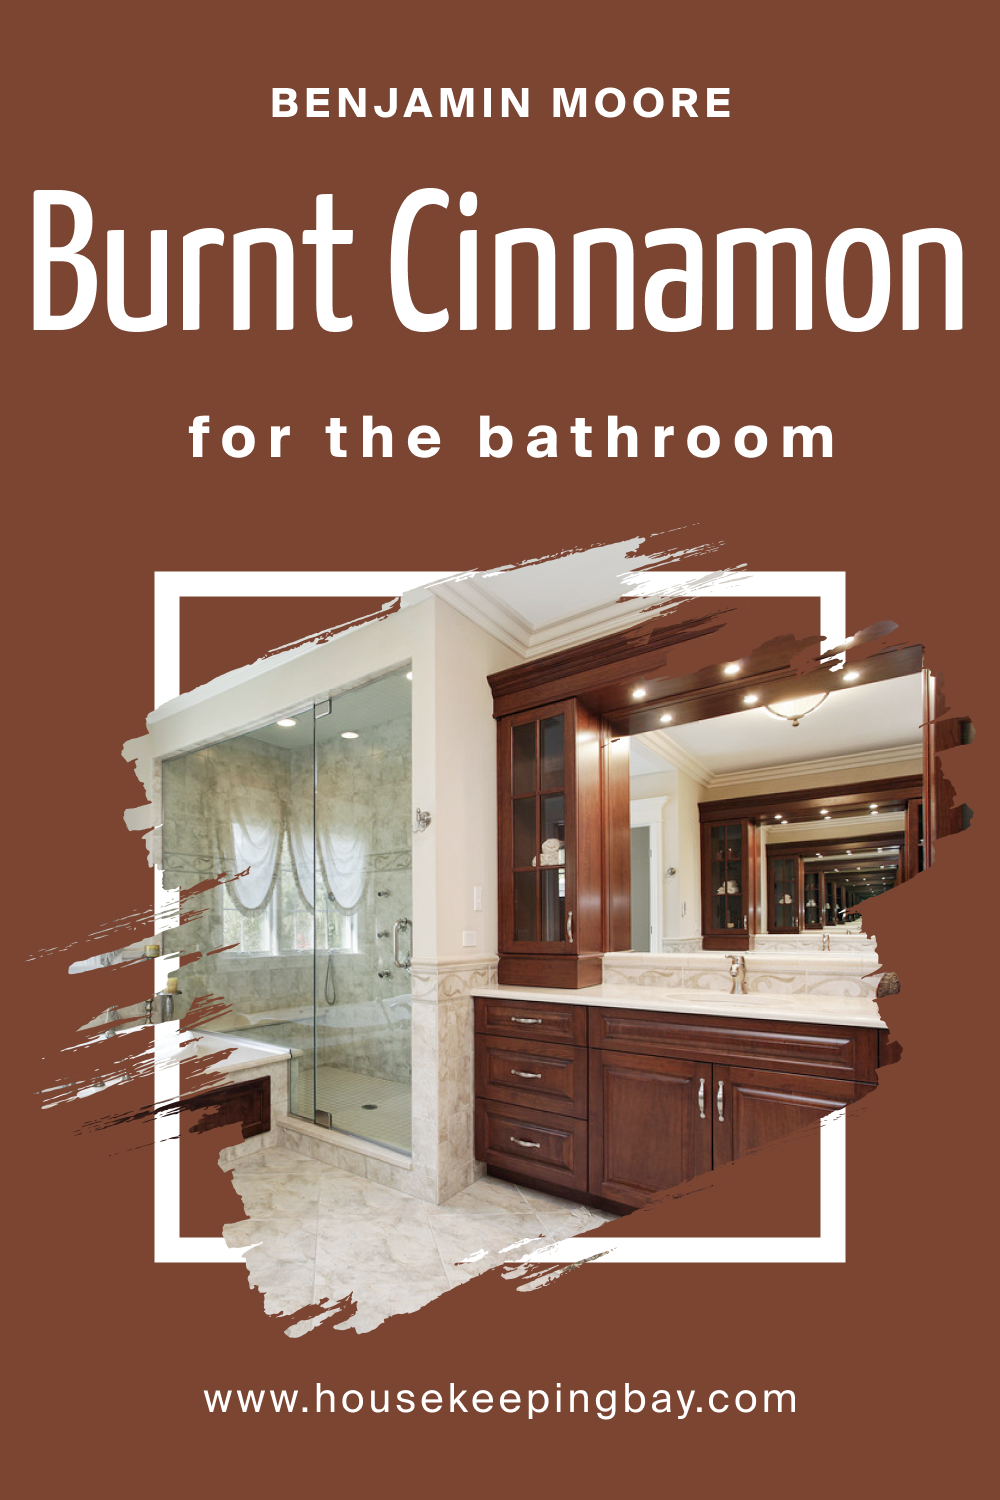 How to Use BM Burnt Cinnamon 2094-10 in the Bathroom?